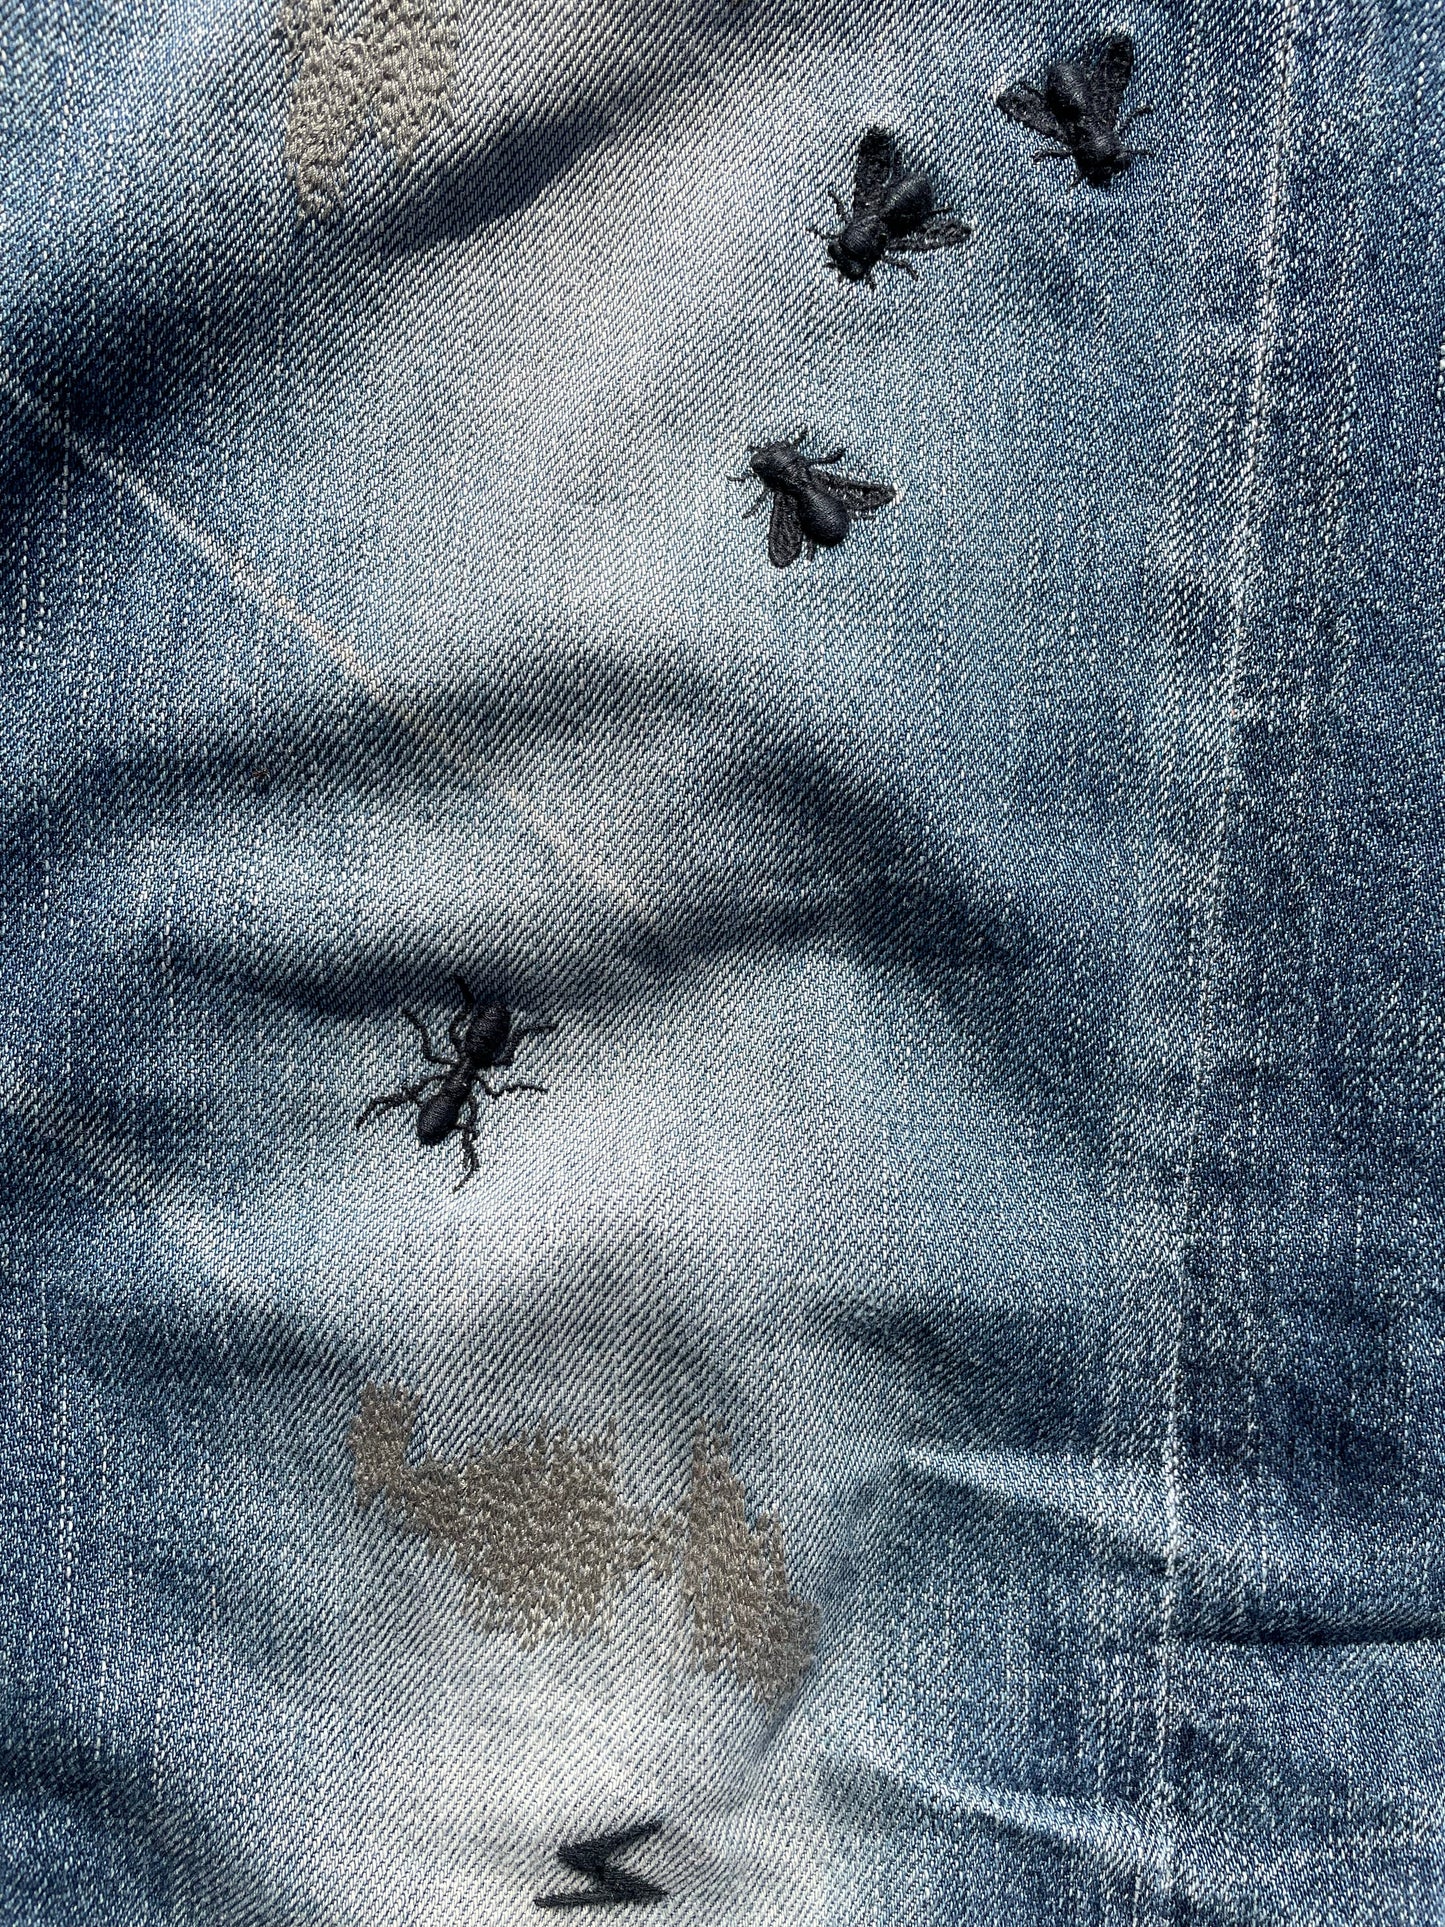 AW06 Guruguru - Undercover Insect Bug Blue Denim